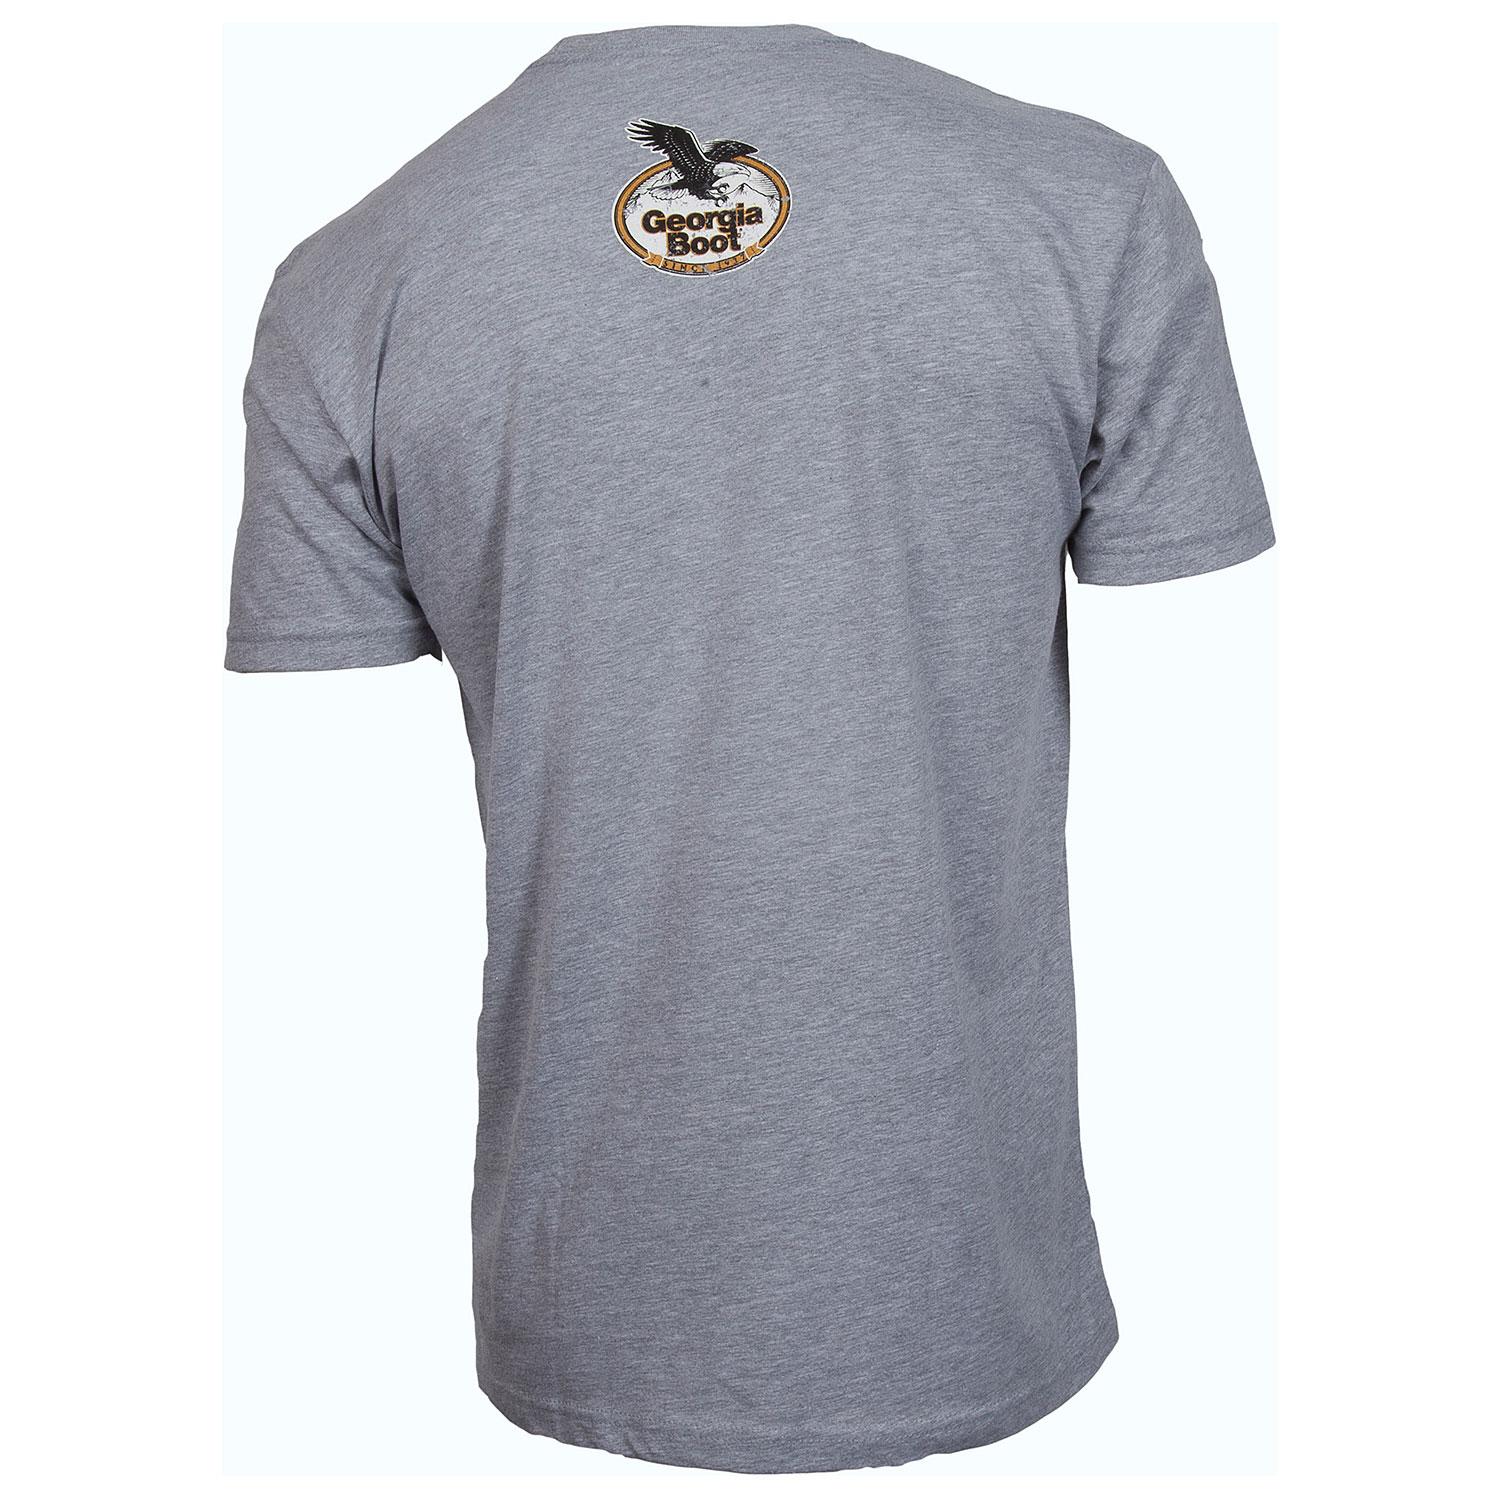 Georgia Boot: Men's Vintage Gray T-Shirt, style #LW00073